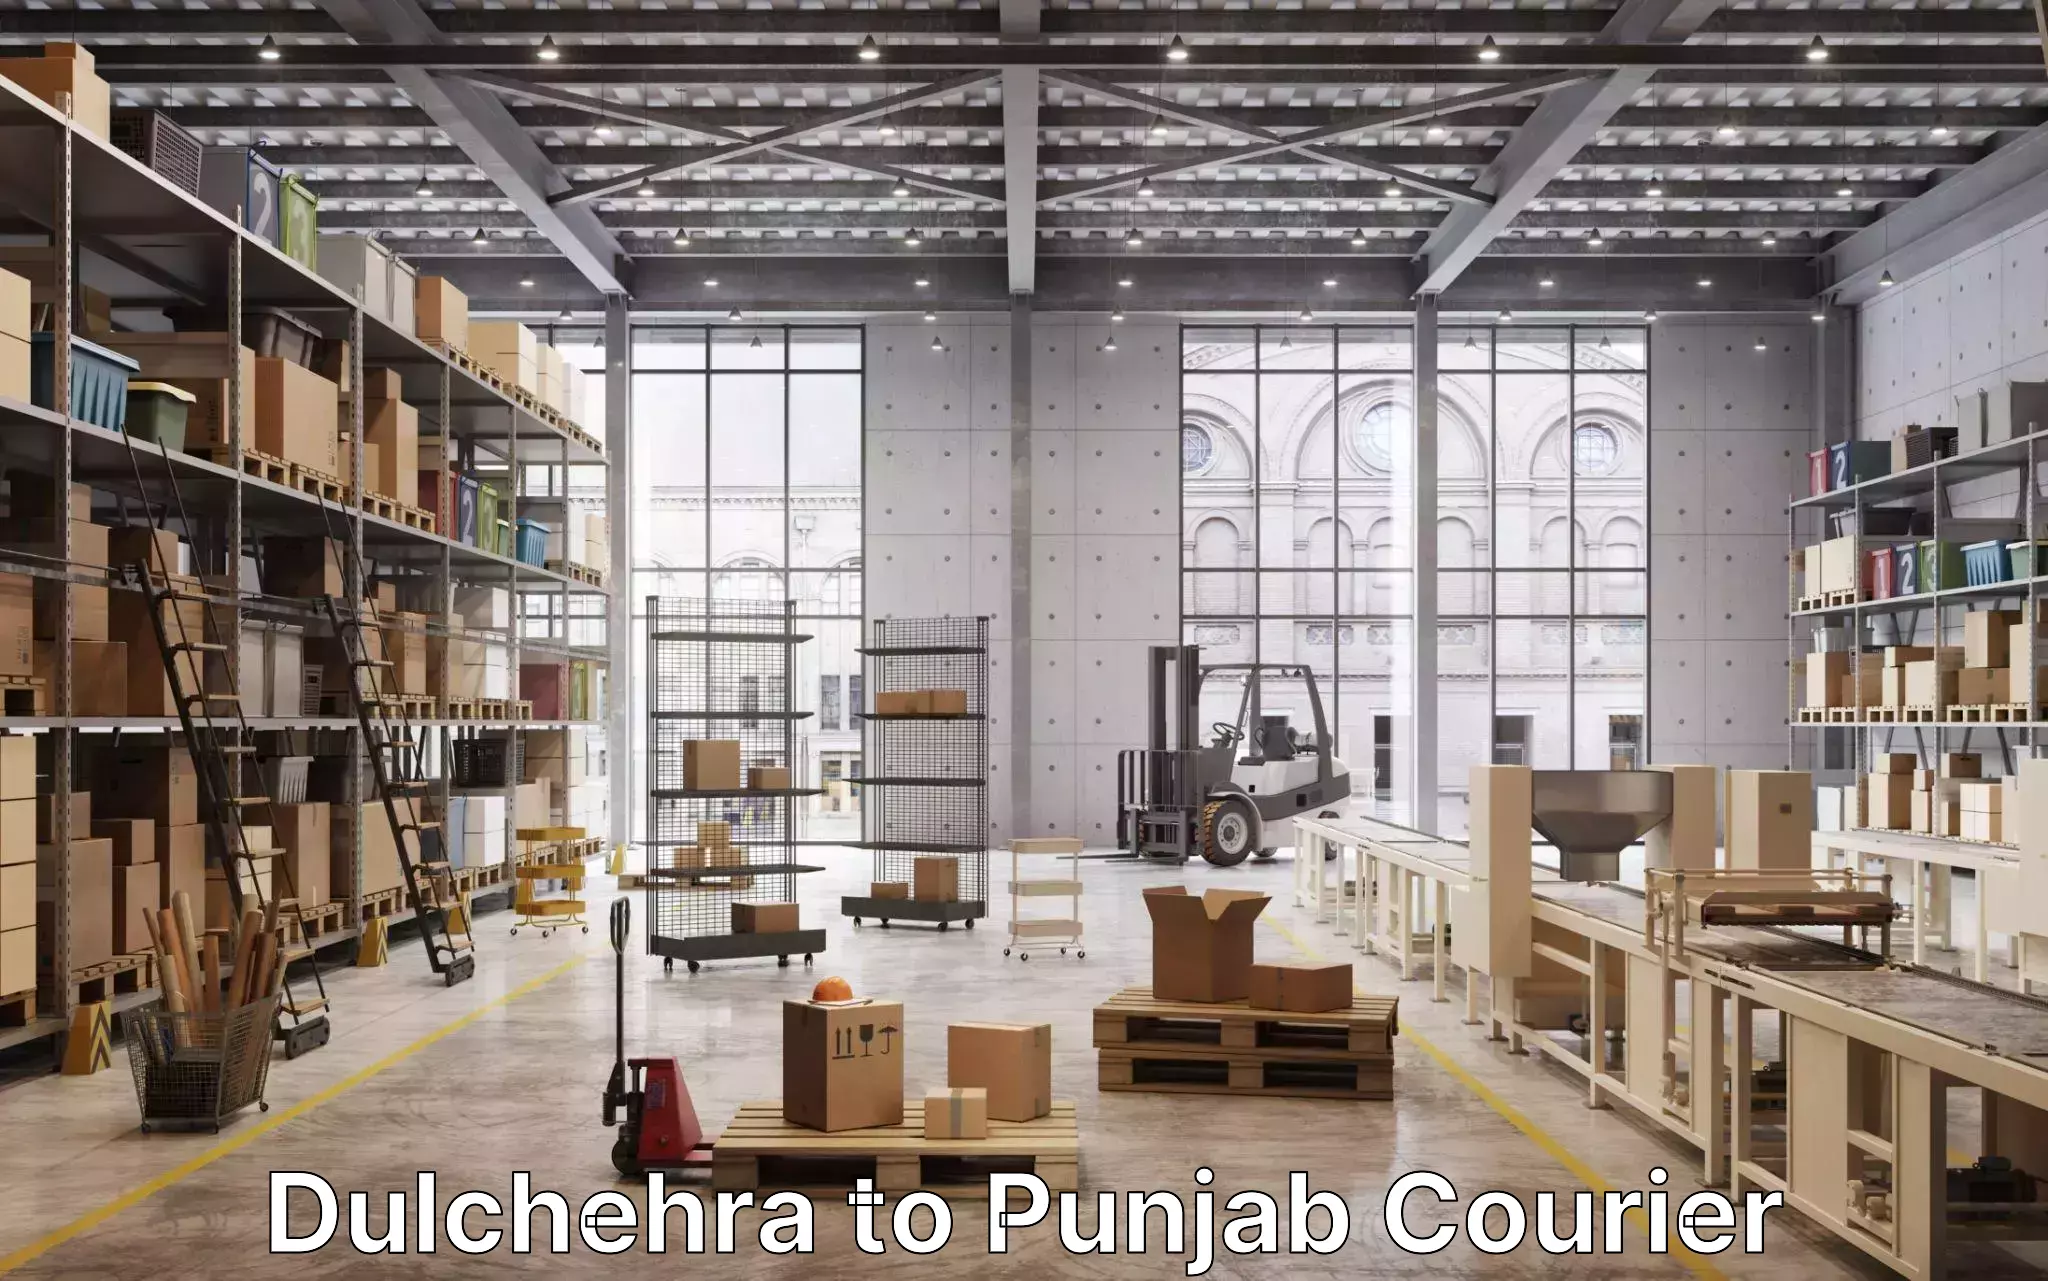 Quality moving company Dulchehra to Punjab